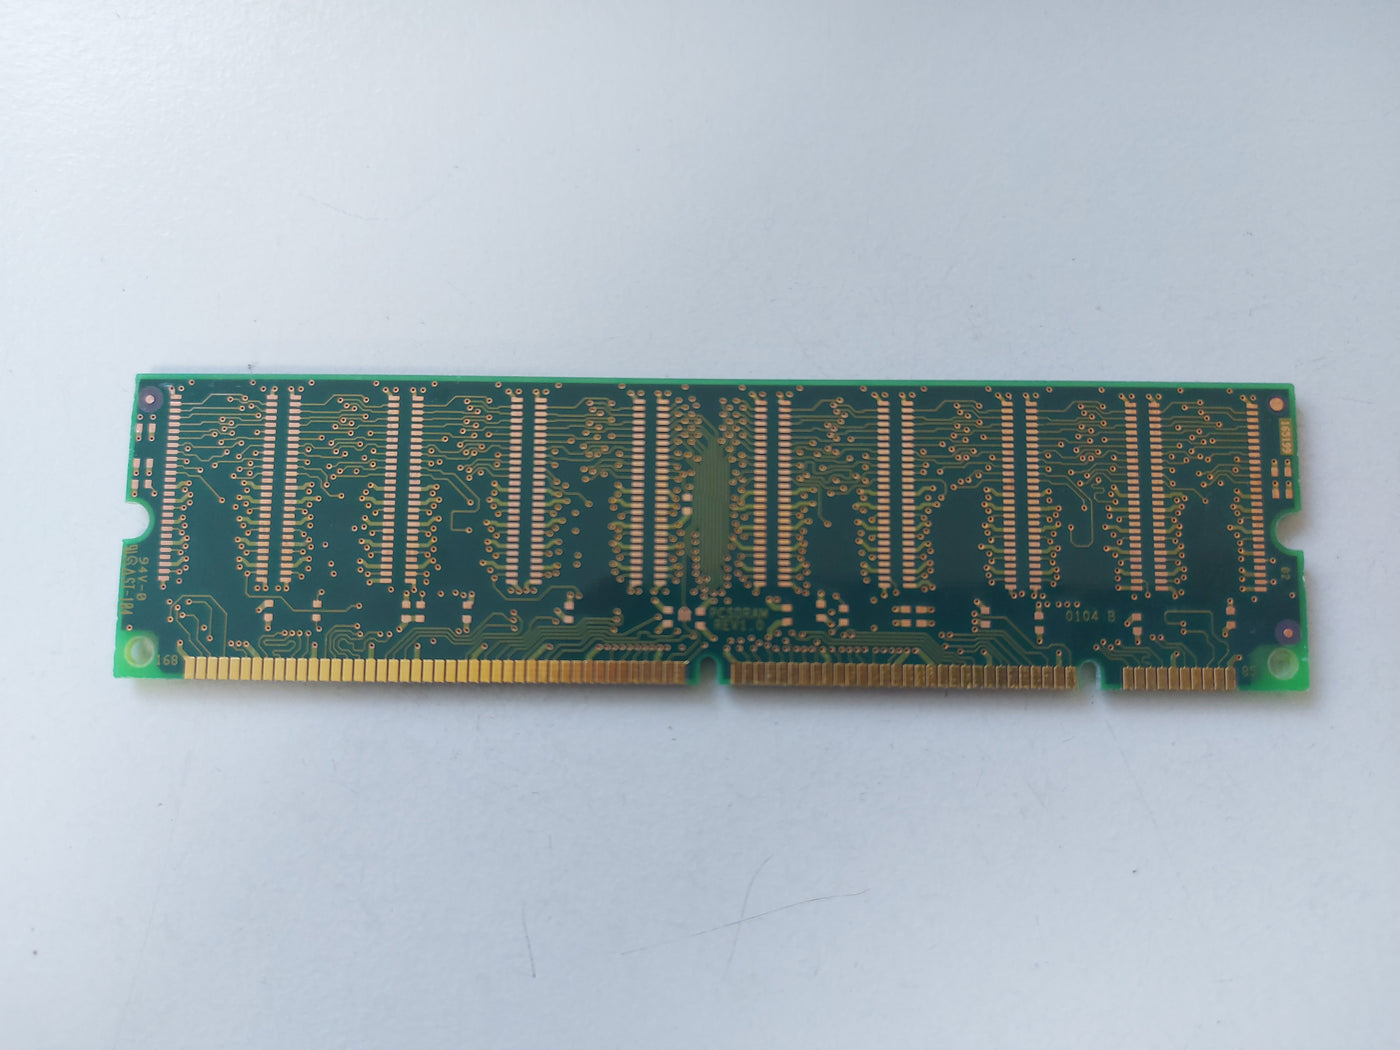 Micron 64MB PC100 100MHz CL2 ECC 168-Pin SDRAM DIMM ( MT9LSDT872AG-10EC7 ) REF